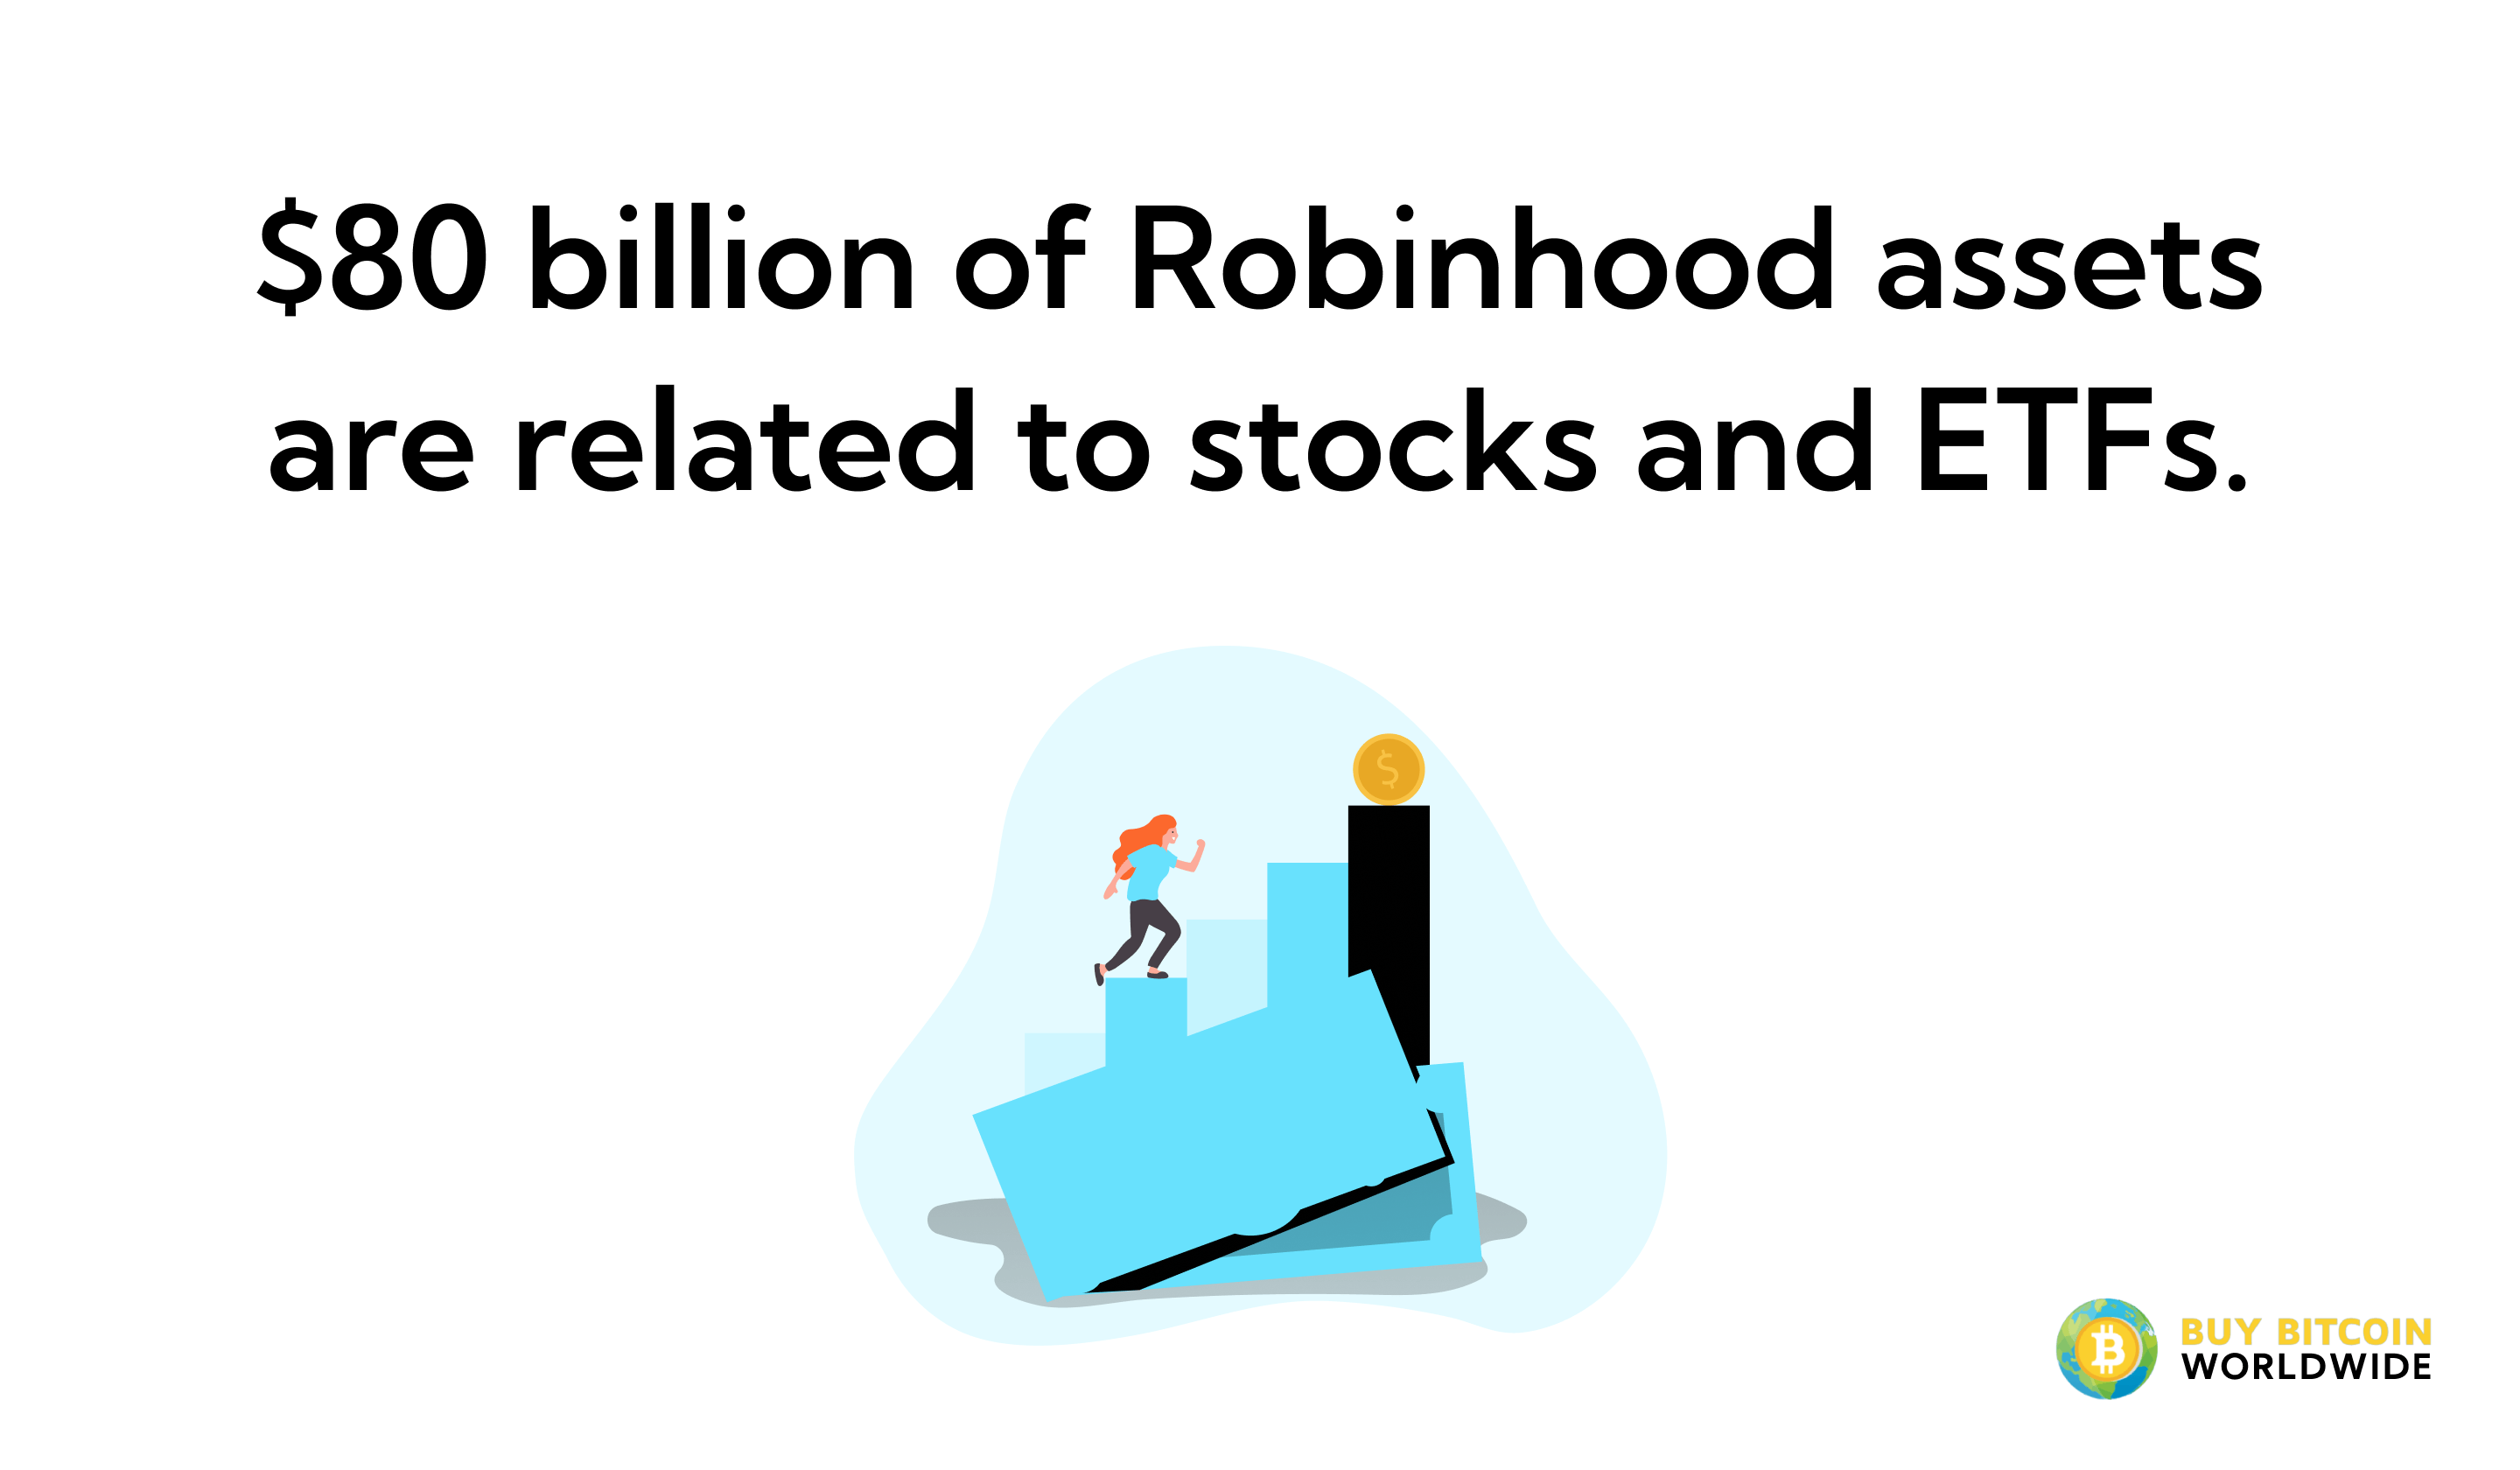 robinhood assets